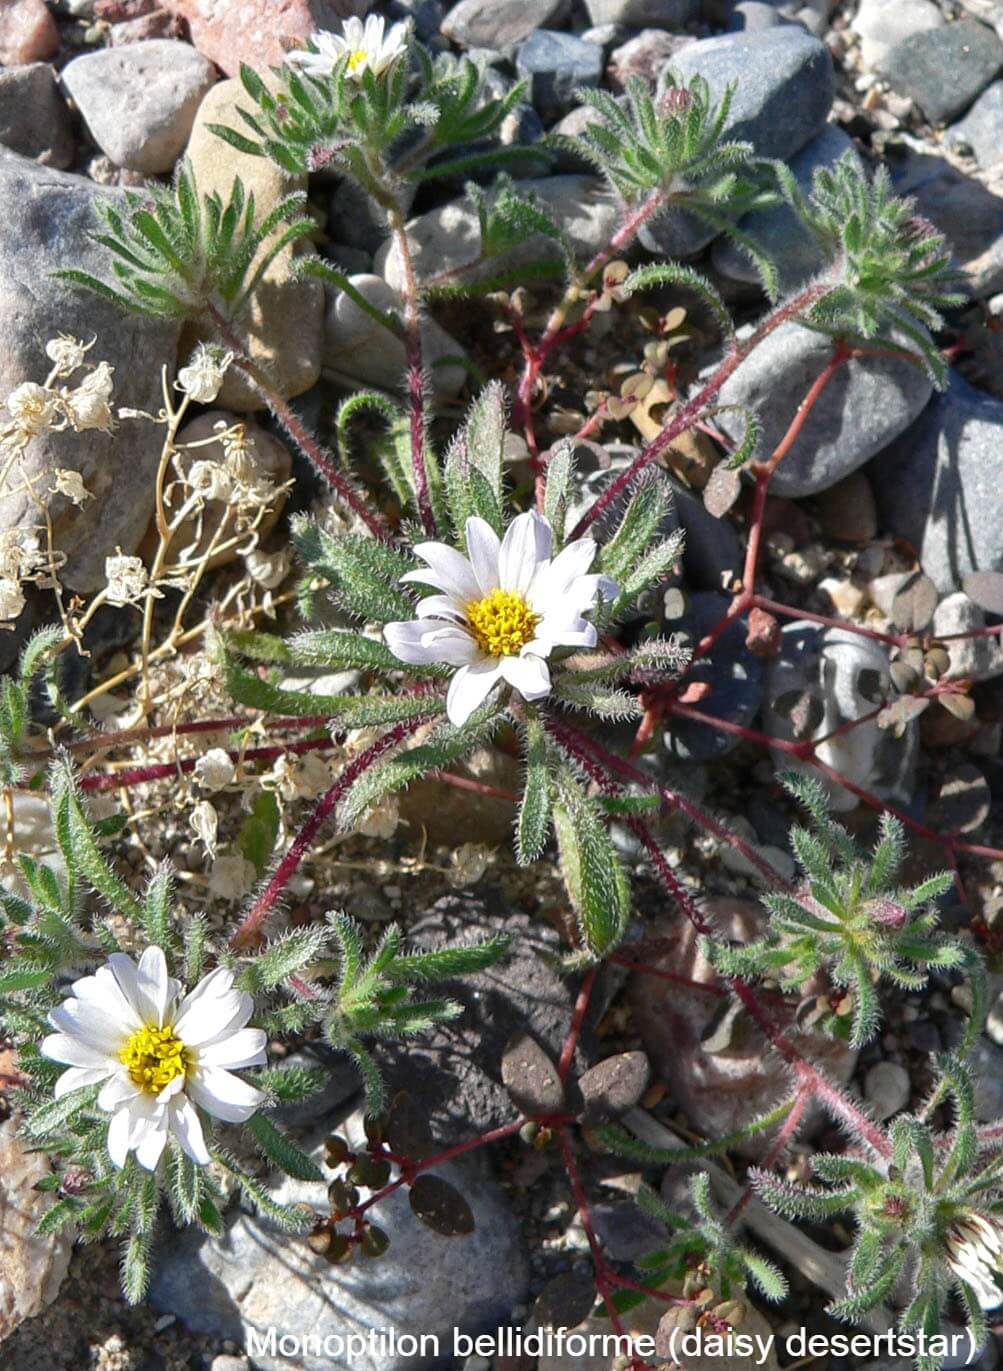 Monoptilon bellidiforme (daisy desertstar)